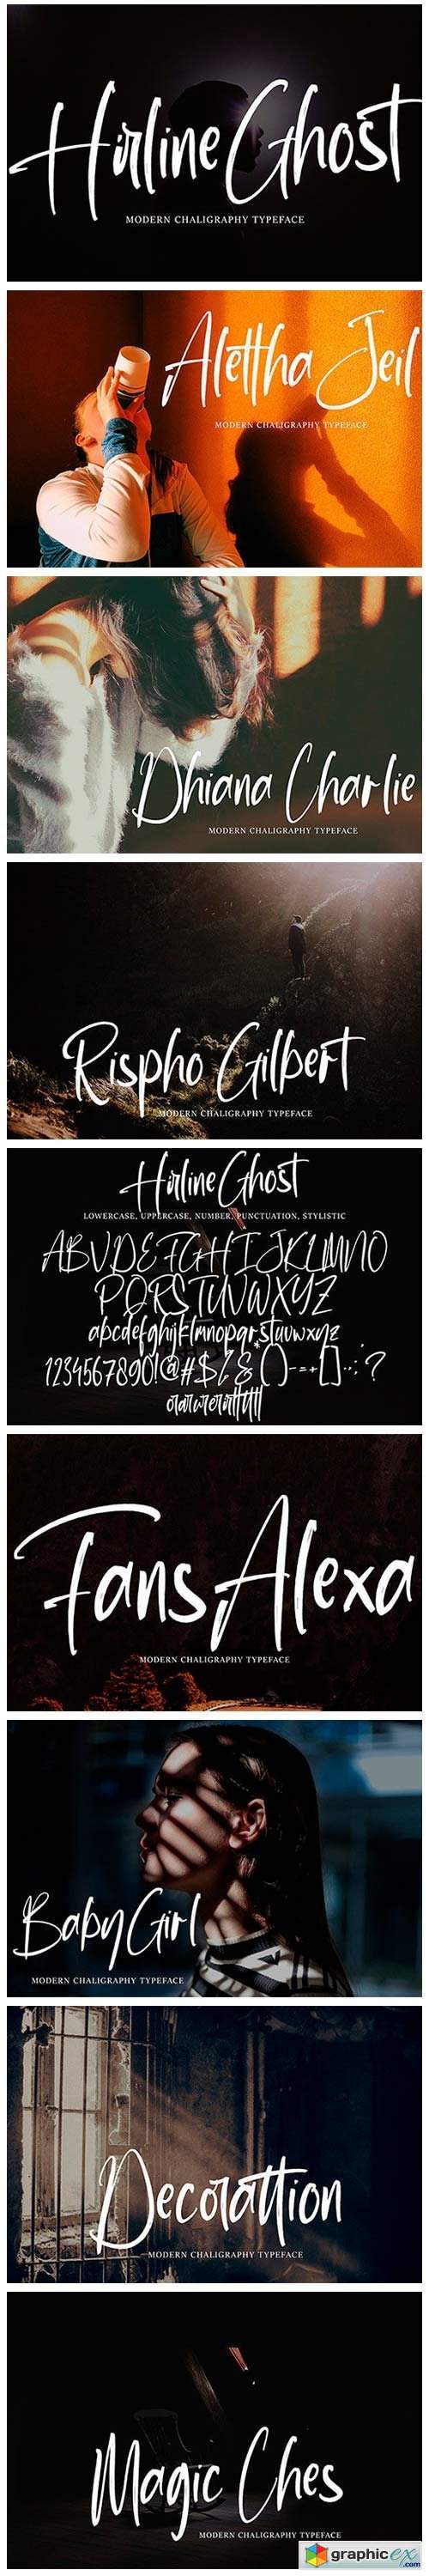 Hirline Ghost Font